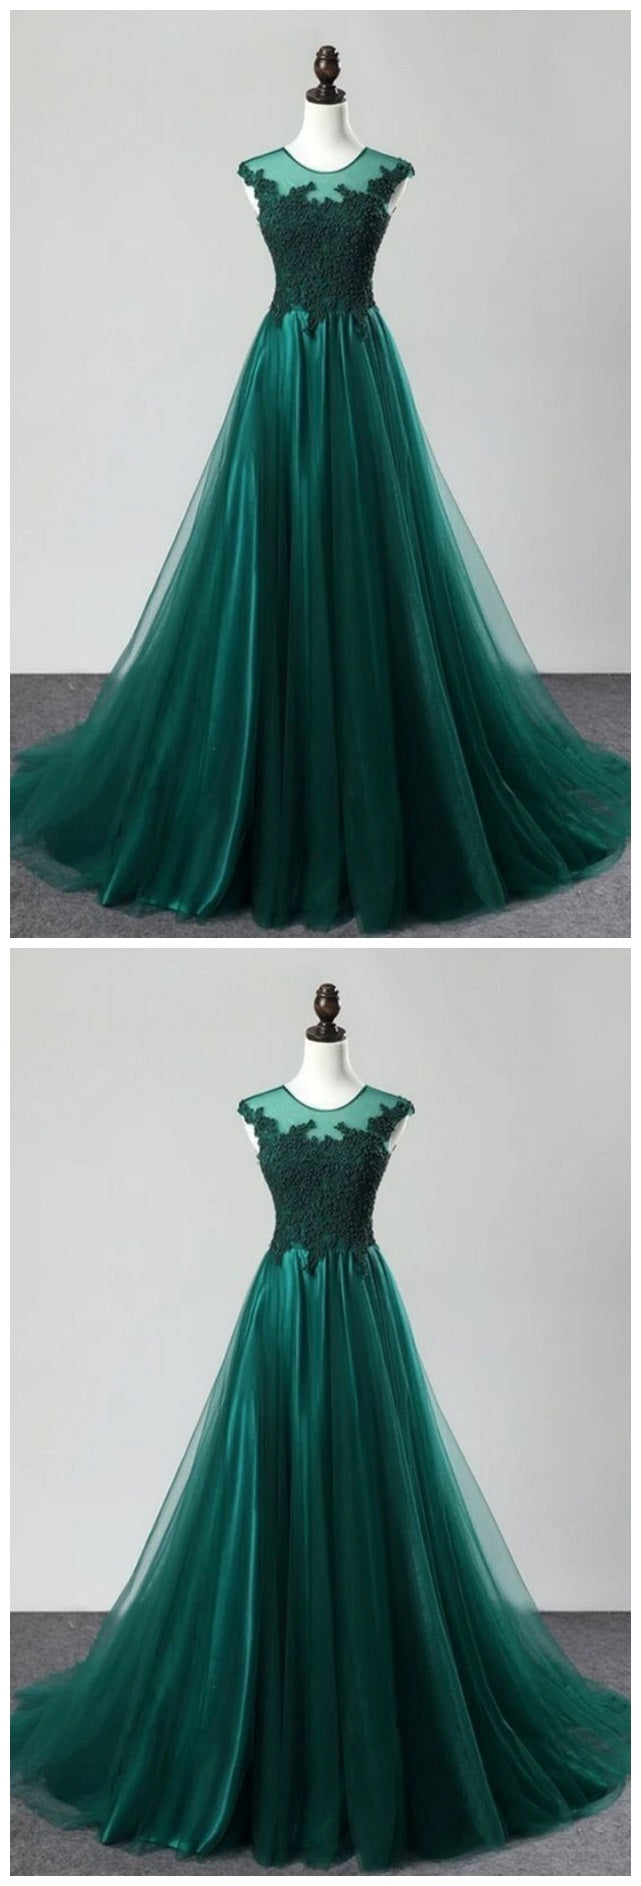 Dark Green Ball Gown Long Formal Dress with Sequin Top #C5304A -  GemGrace.com